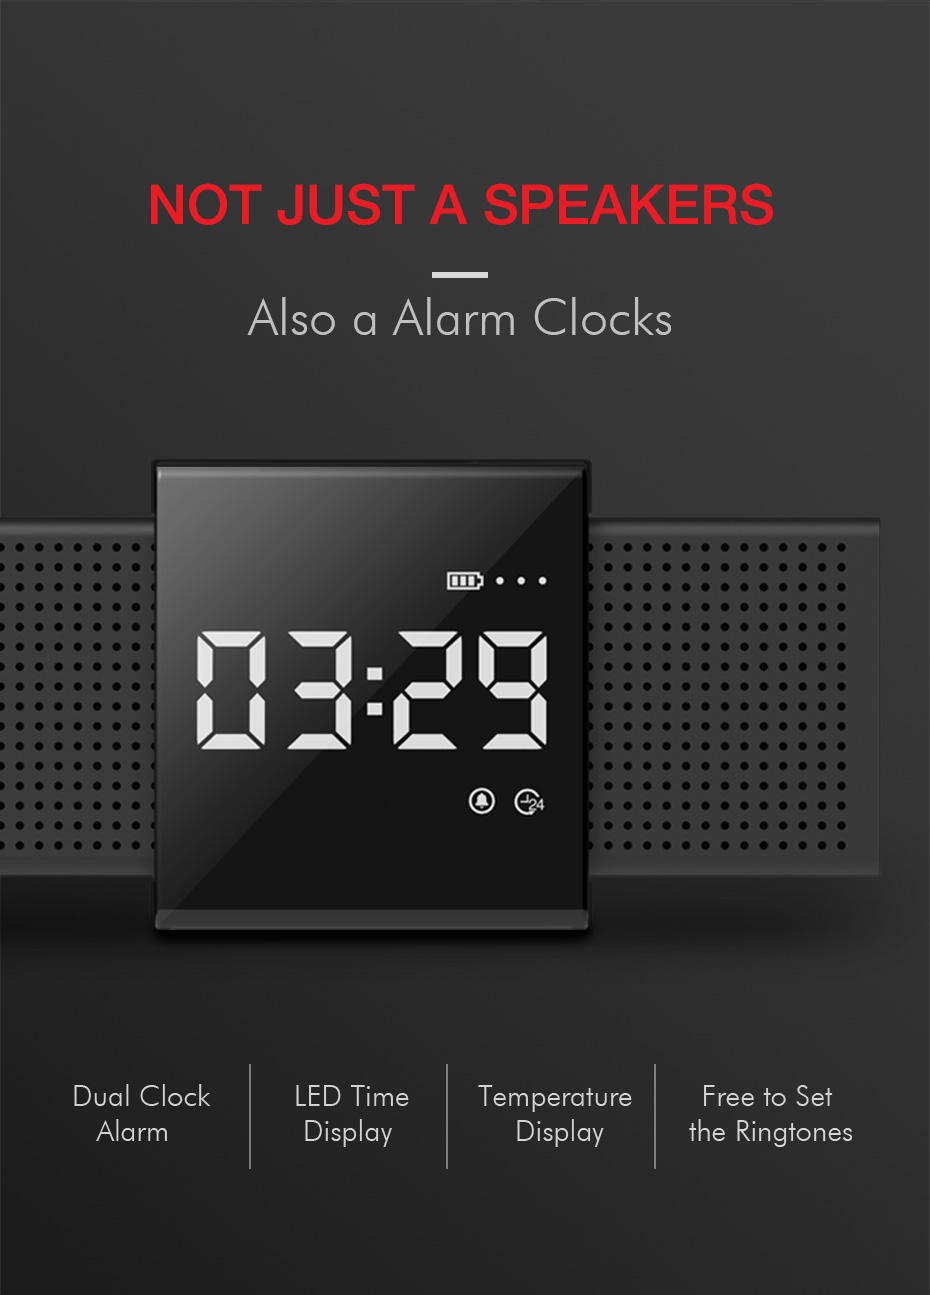 Havit-M28-Portable-Wireless-bluetooth-Speaker-Dual-Units-LED-Display-Alarm-Clock-FM-Radio-TF-Card-Sm-1461200